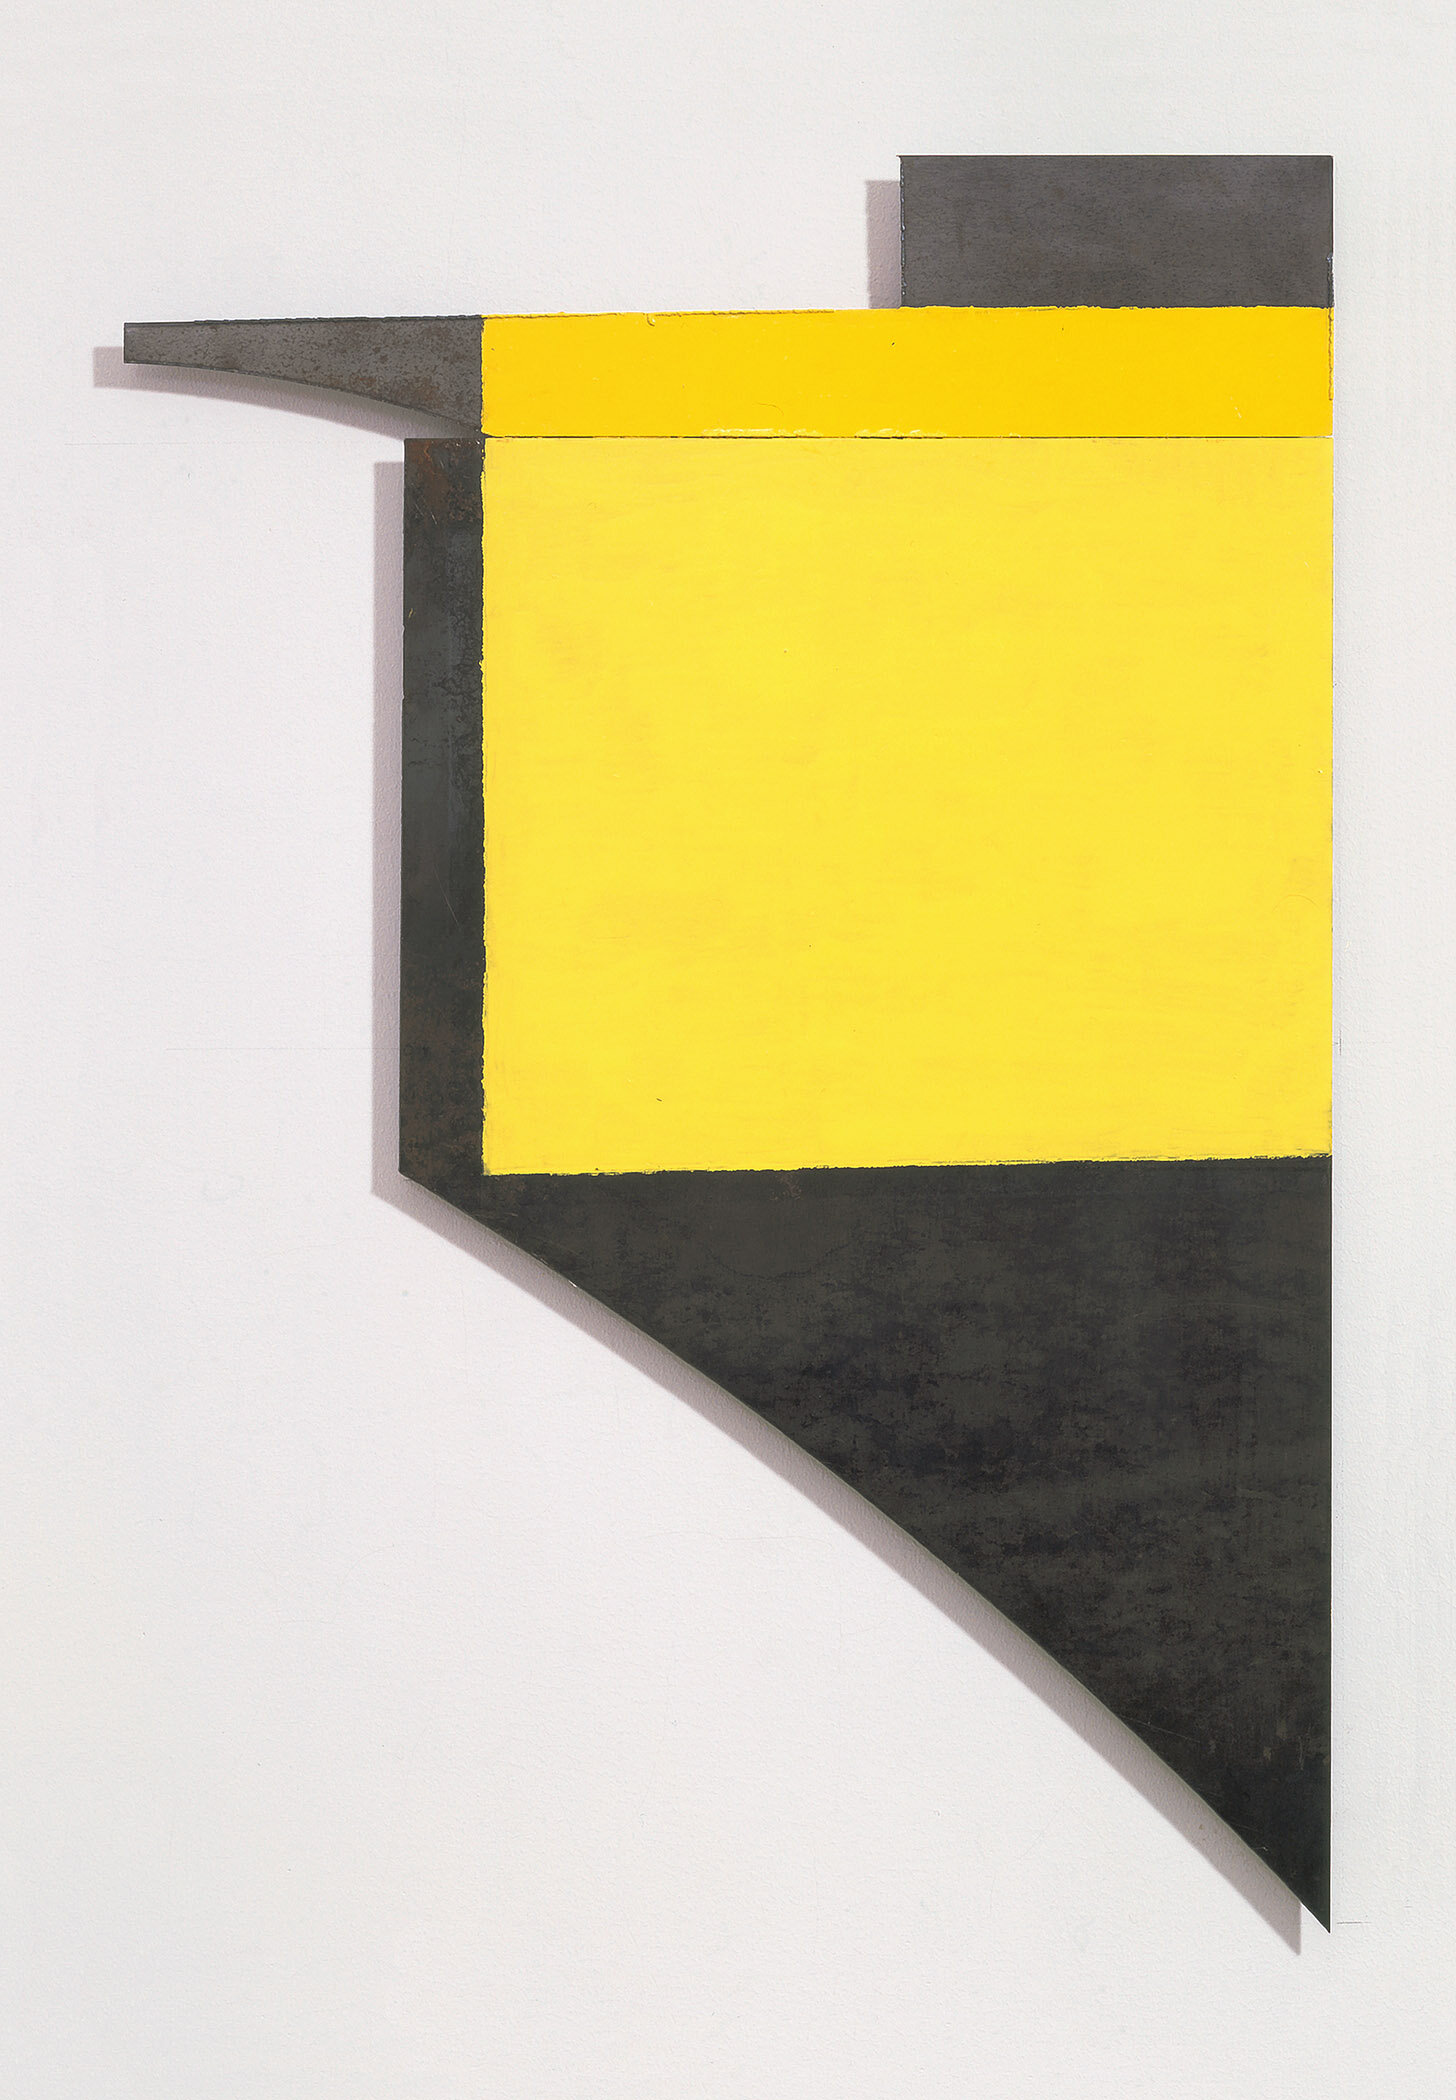   Yellow Bird , 2003, rust preventive paint on steel, 24 x 16 in 